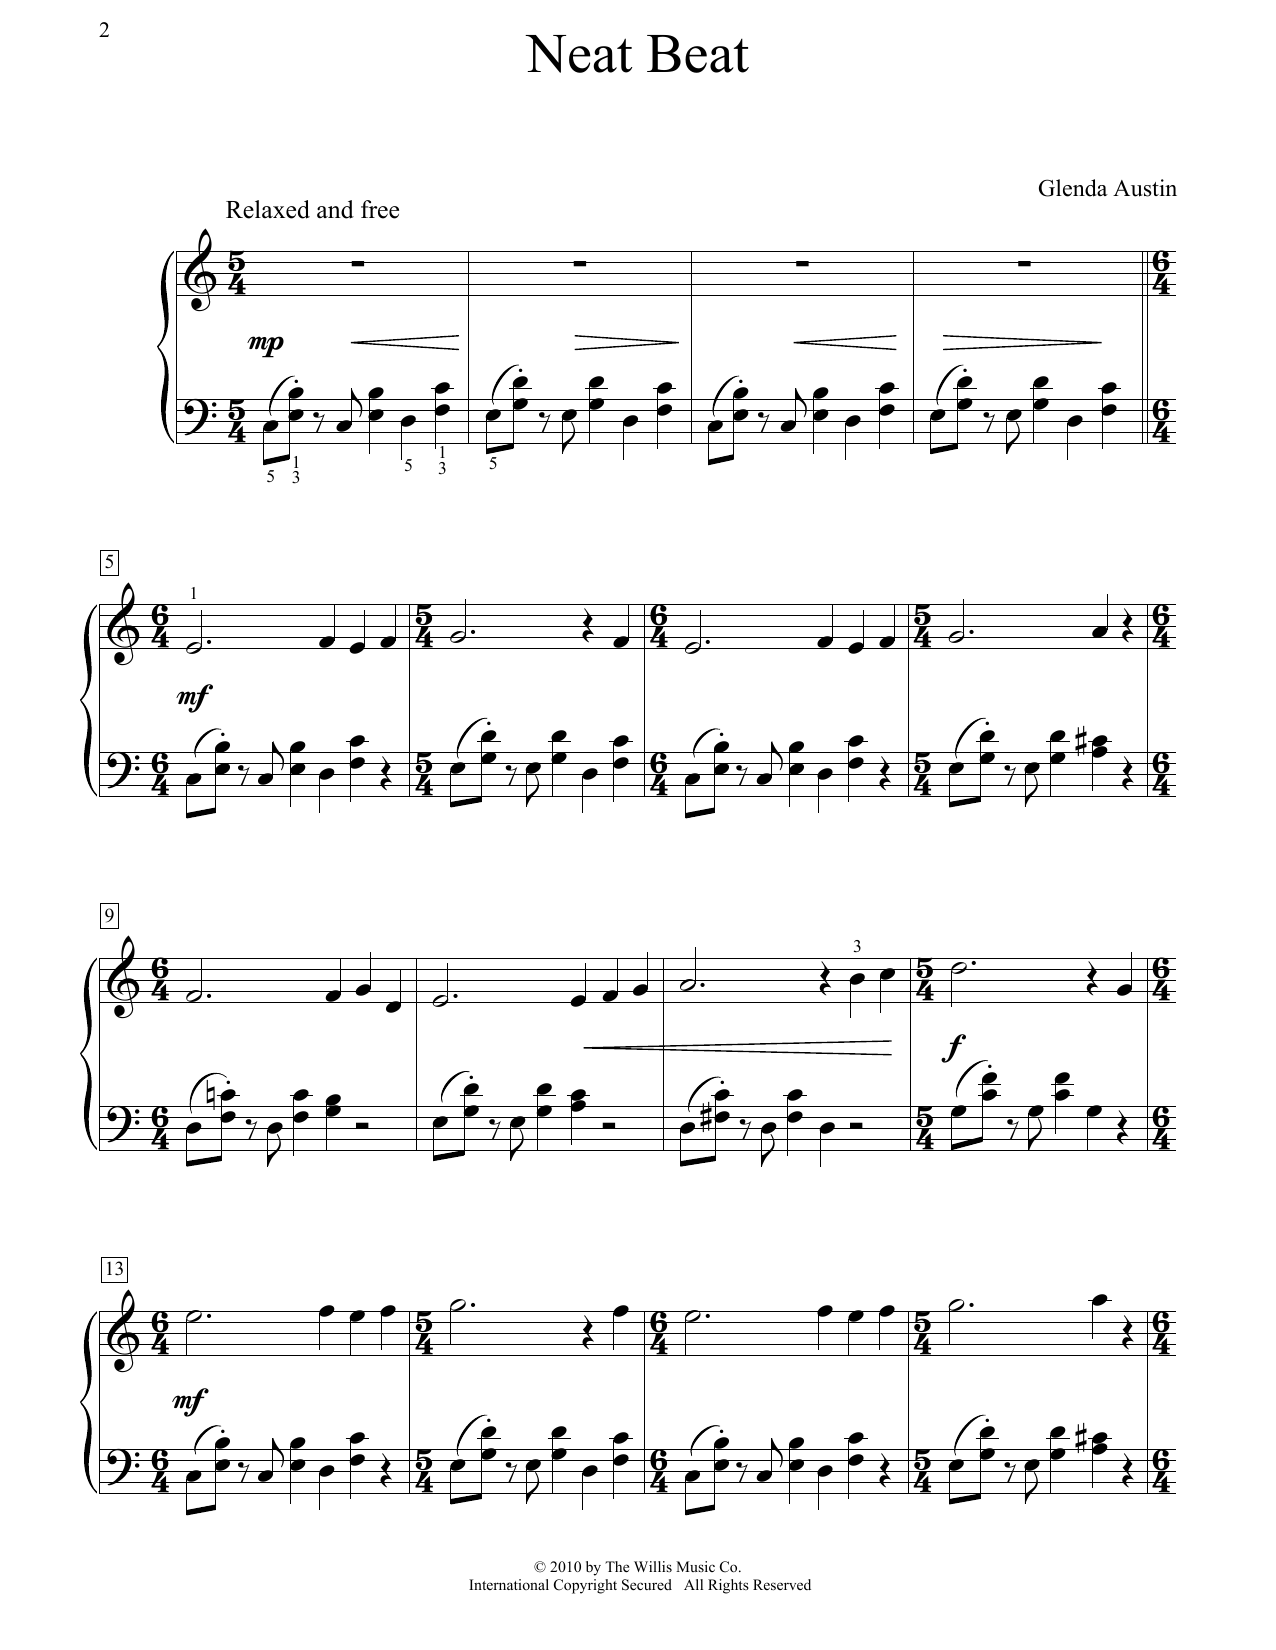 Glenda Austin Neat Beat Sheet Music Notes & Chords for Piano - Download or Print PDF